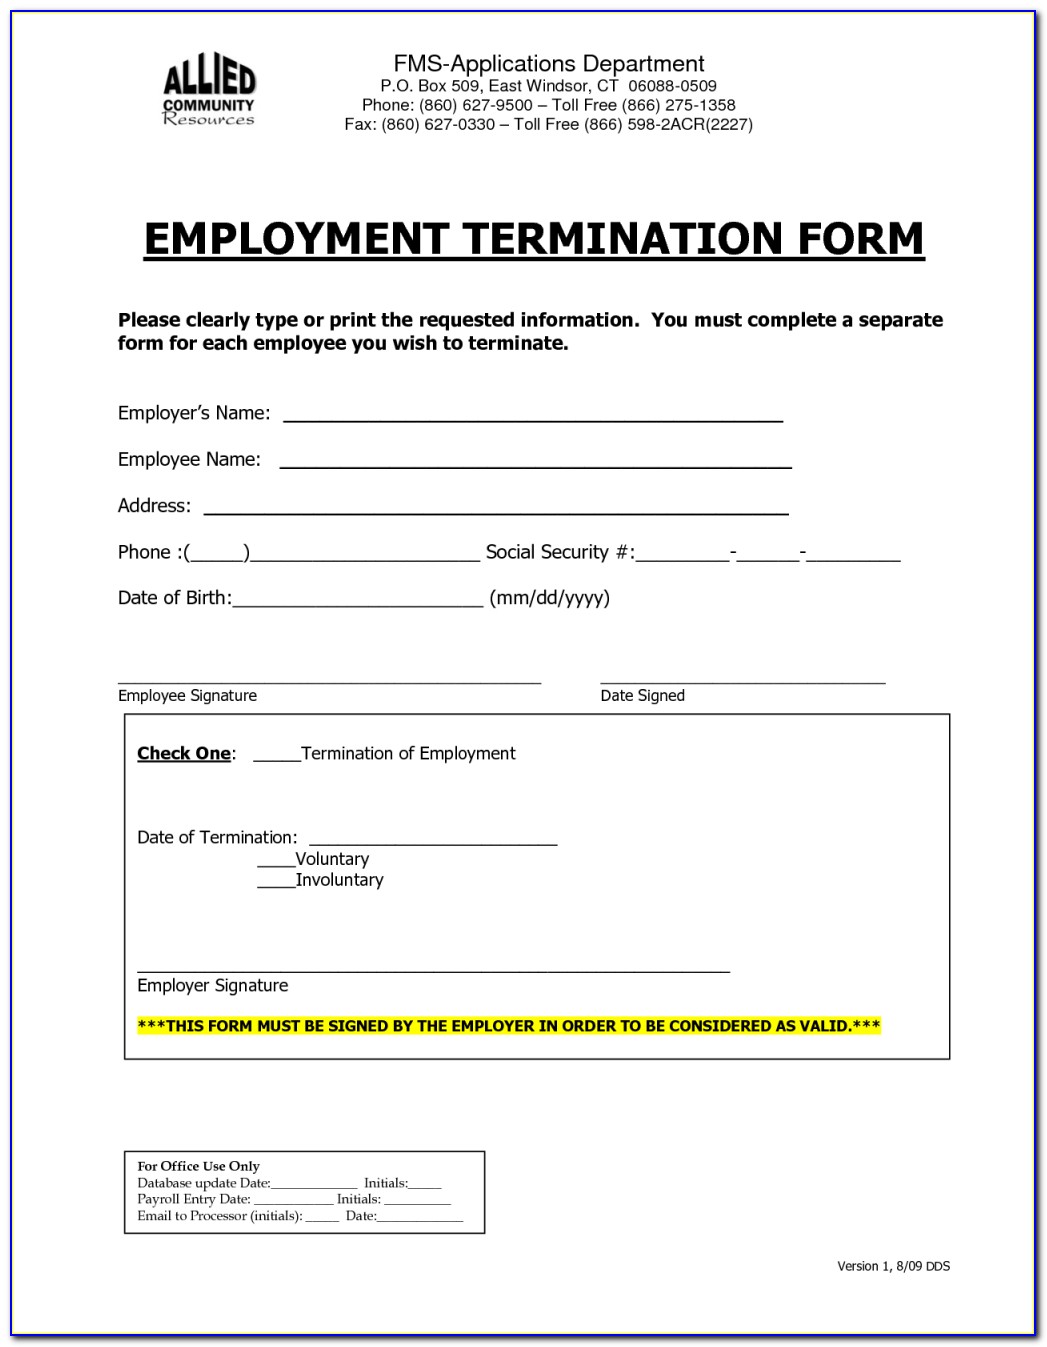 Employment Termination Form Sample